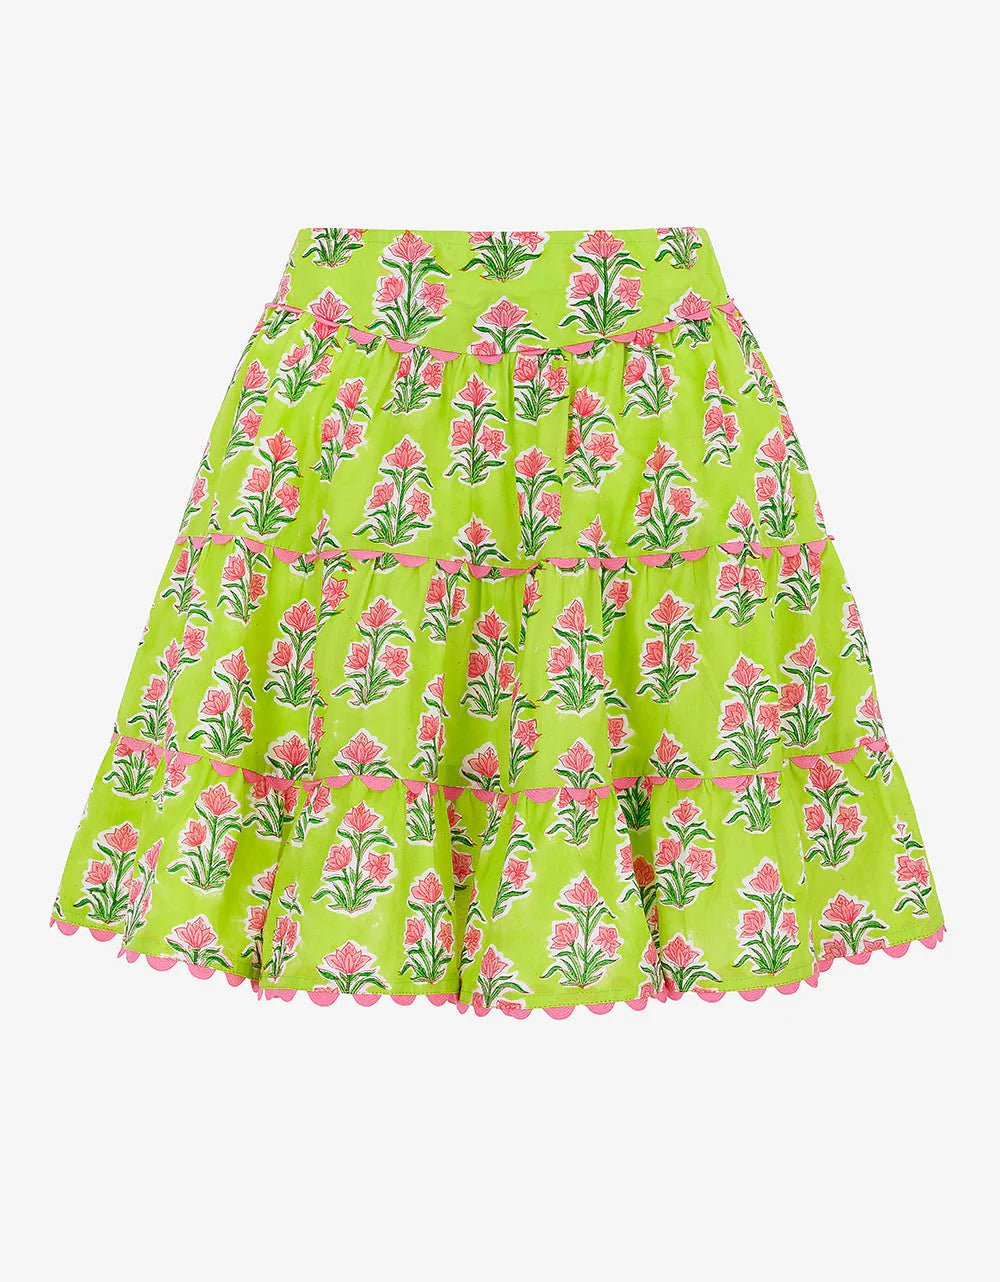 Pink City Prints skirt Elise Skirt in Lime Tulip